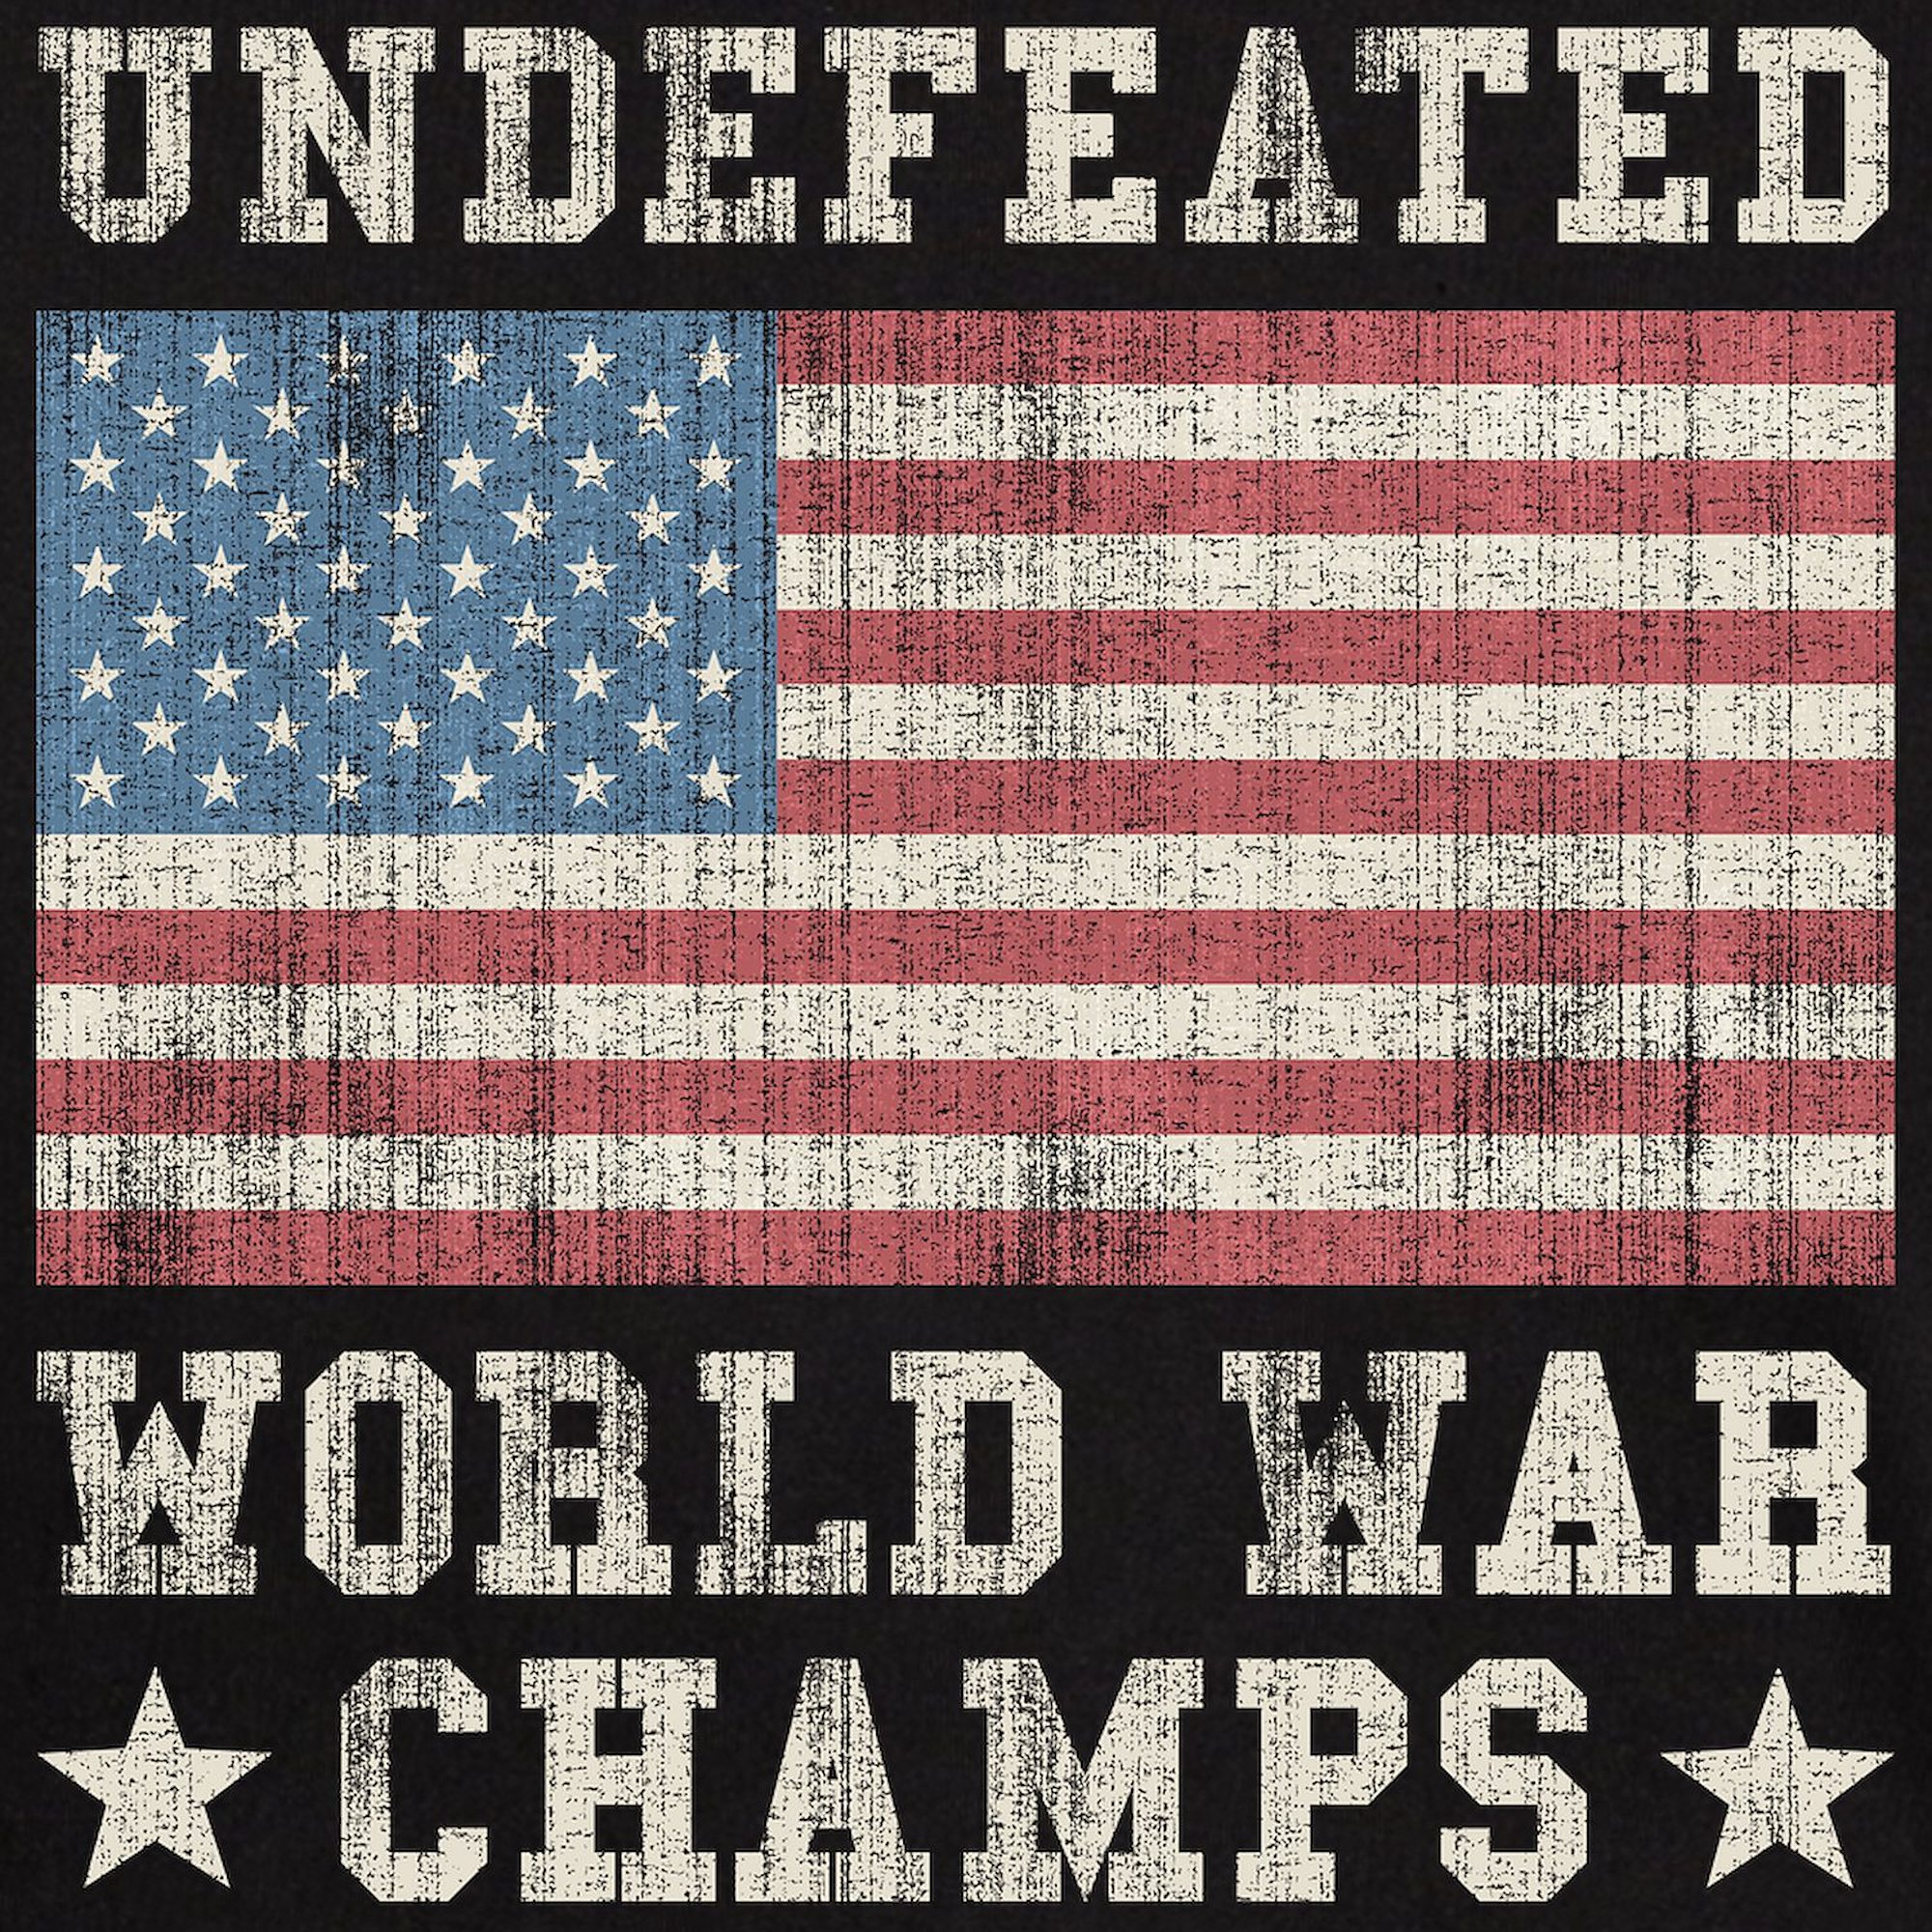 CafePress - Undefeated World War Champs Dark T Shirt - 100% Cotton T-Shirt - image 3 of 4